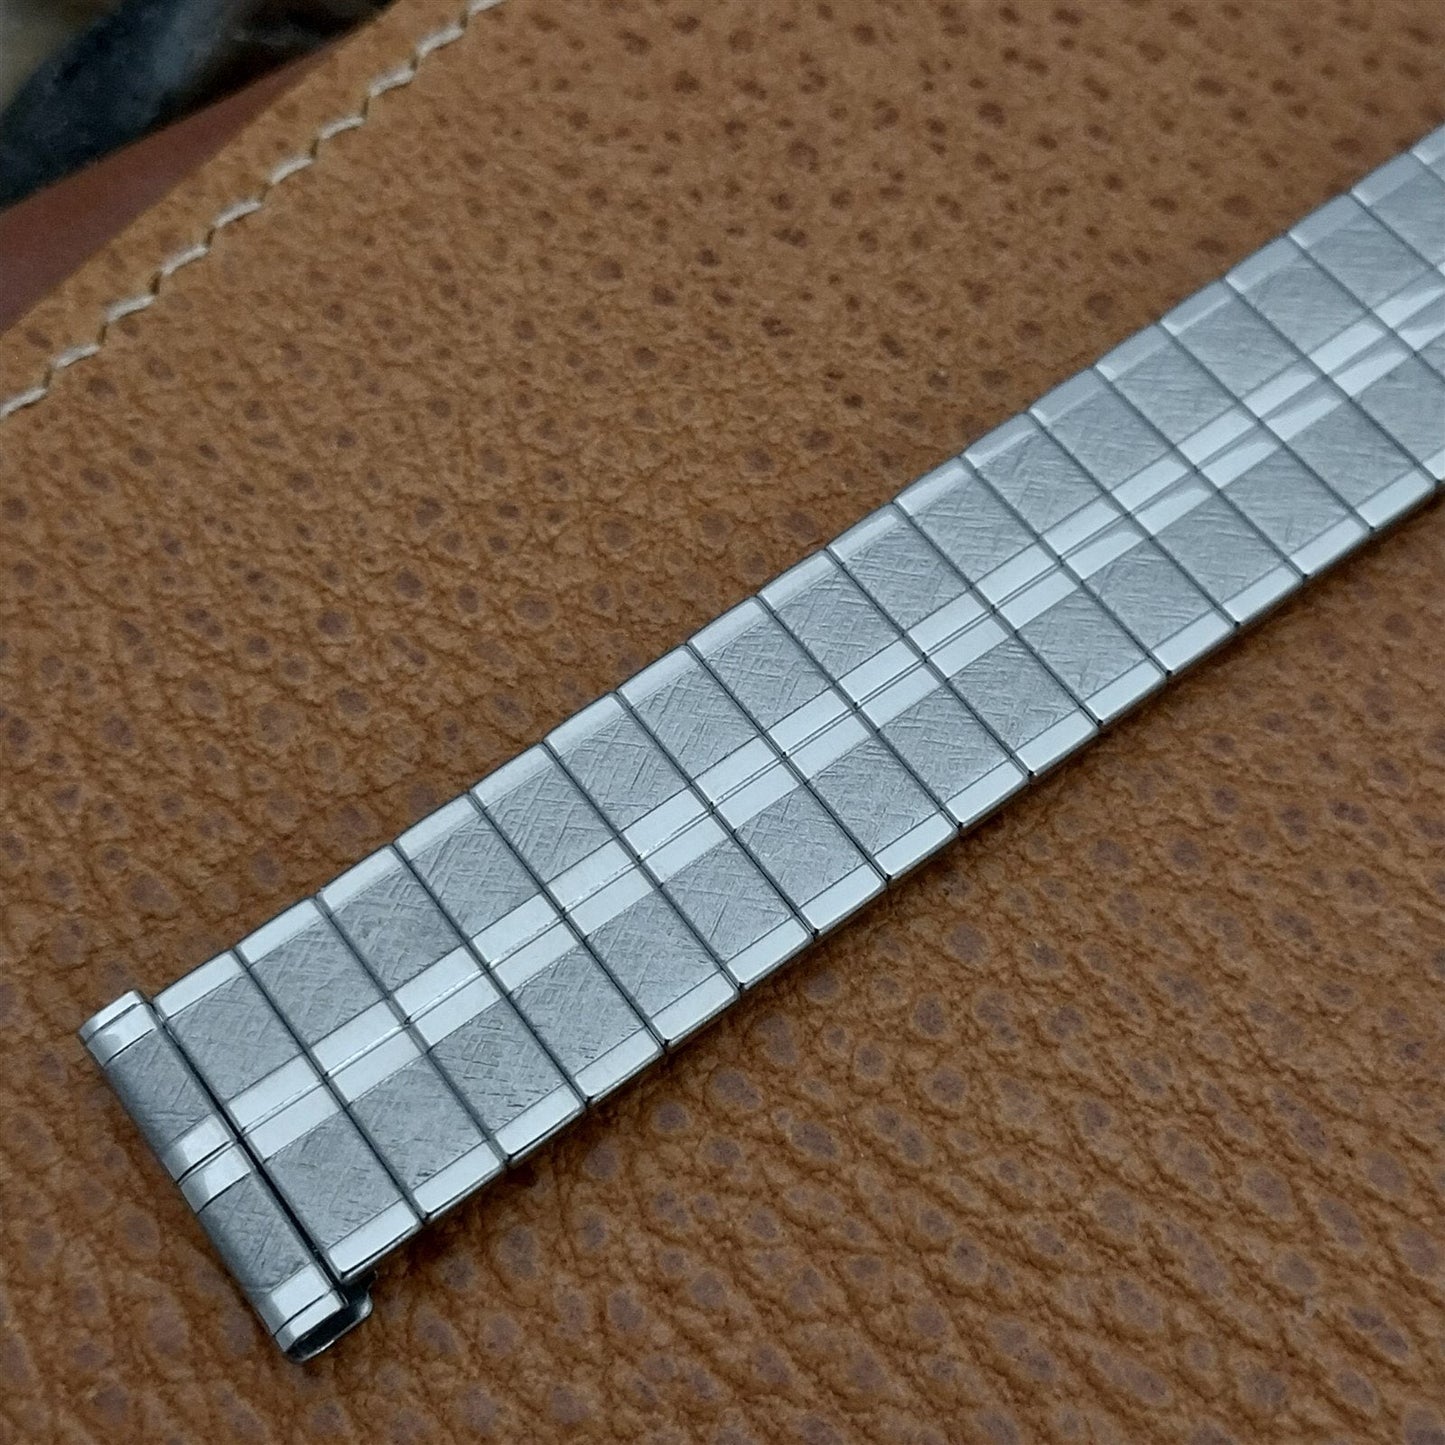 17.2mm 17mm Stainless Uniflex Slim Expansion Unused 1960s Vintage Watch Band